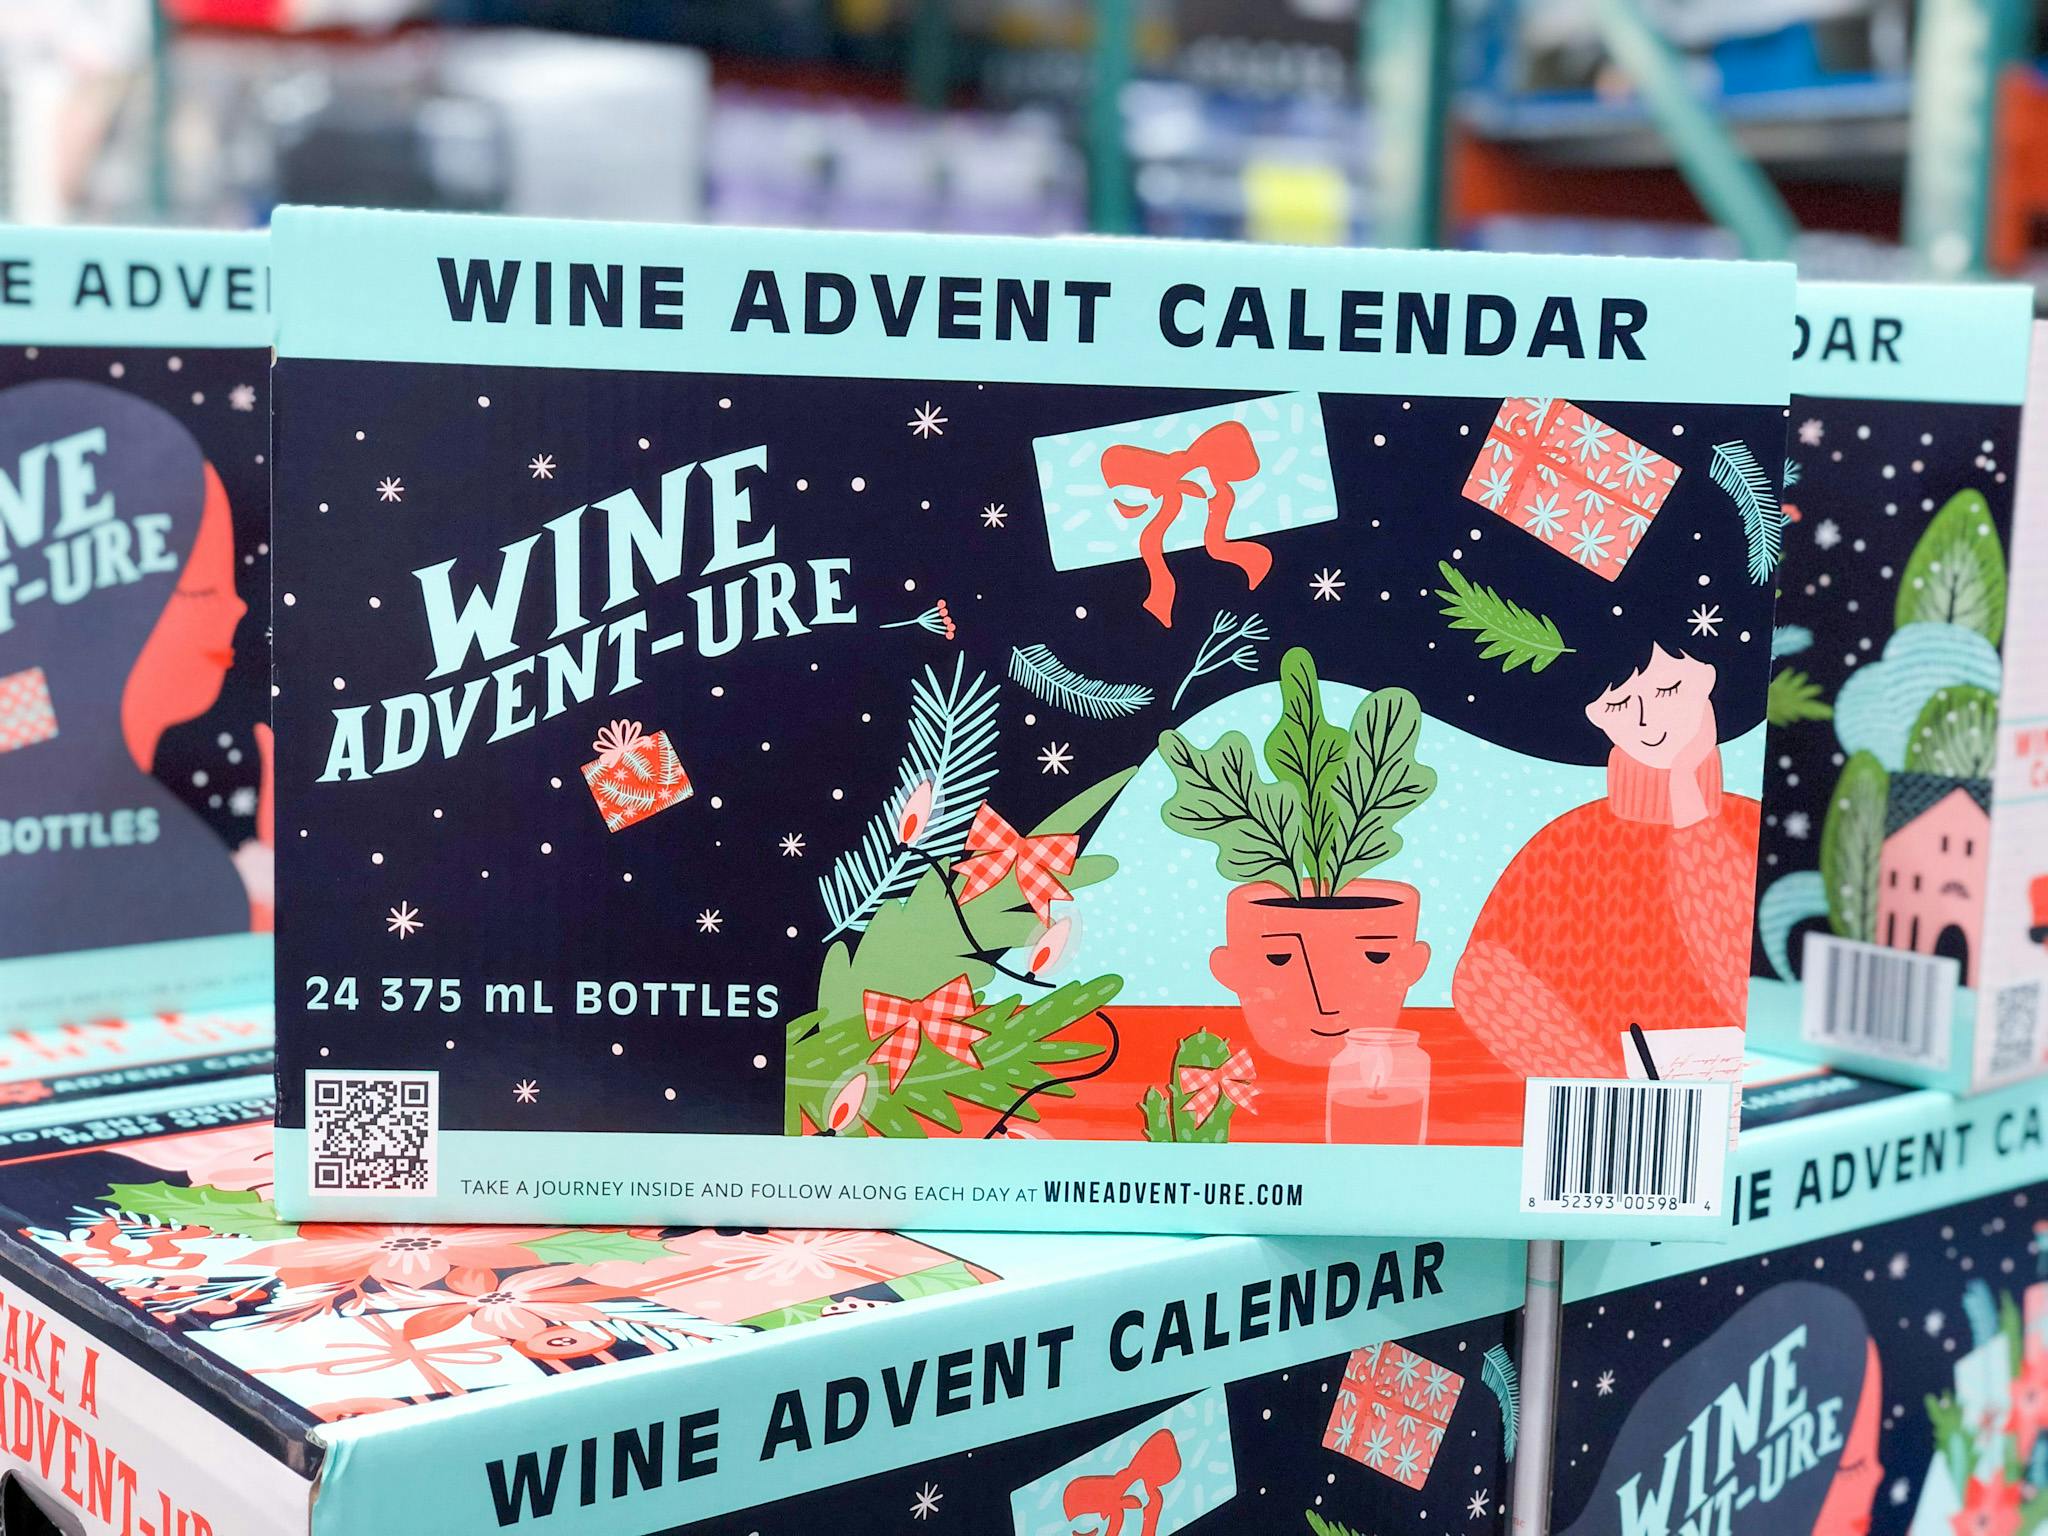 wine advent calendar 2021 sams club